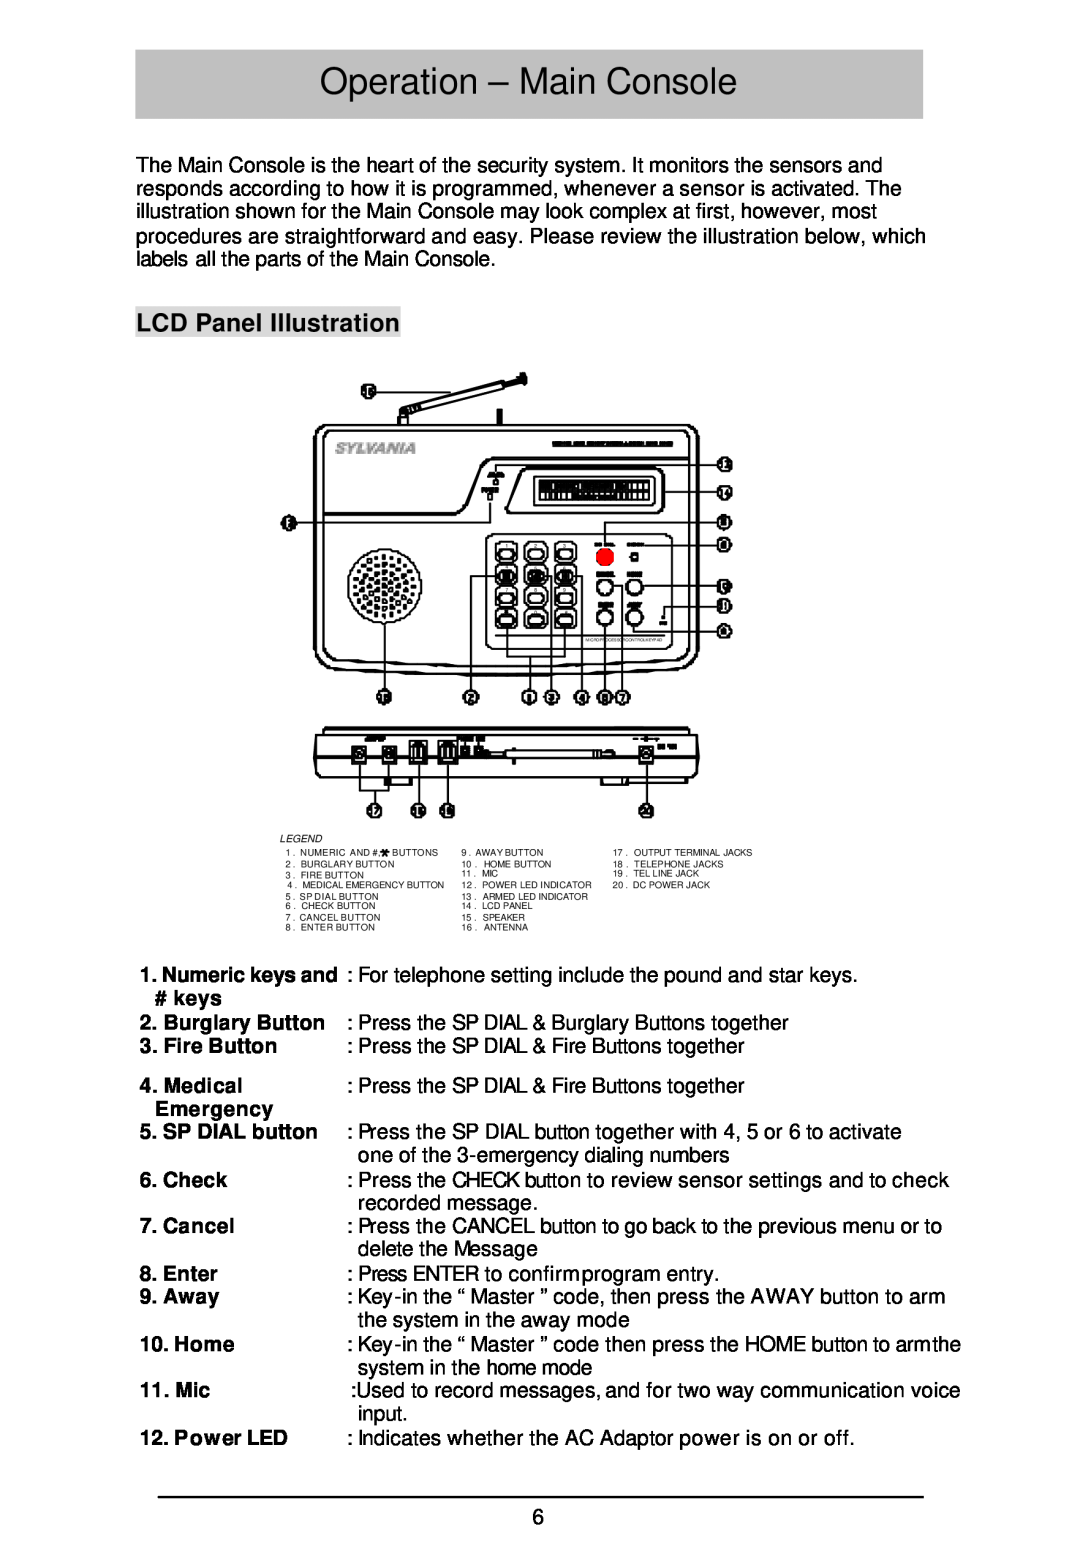 Sylvania SY4100 owner manual Operation - Main Console, LCD Panel Illustration 